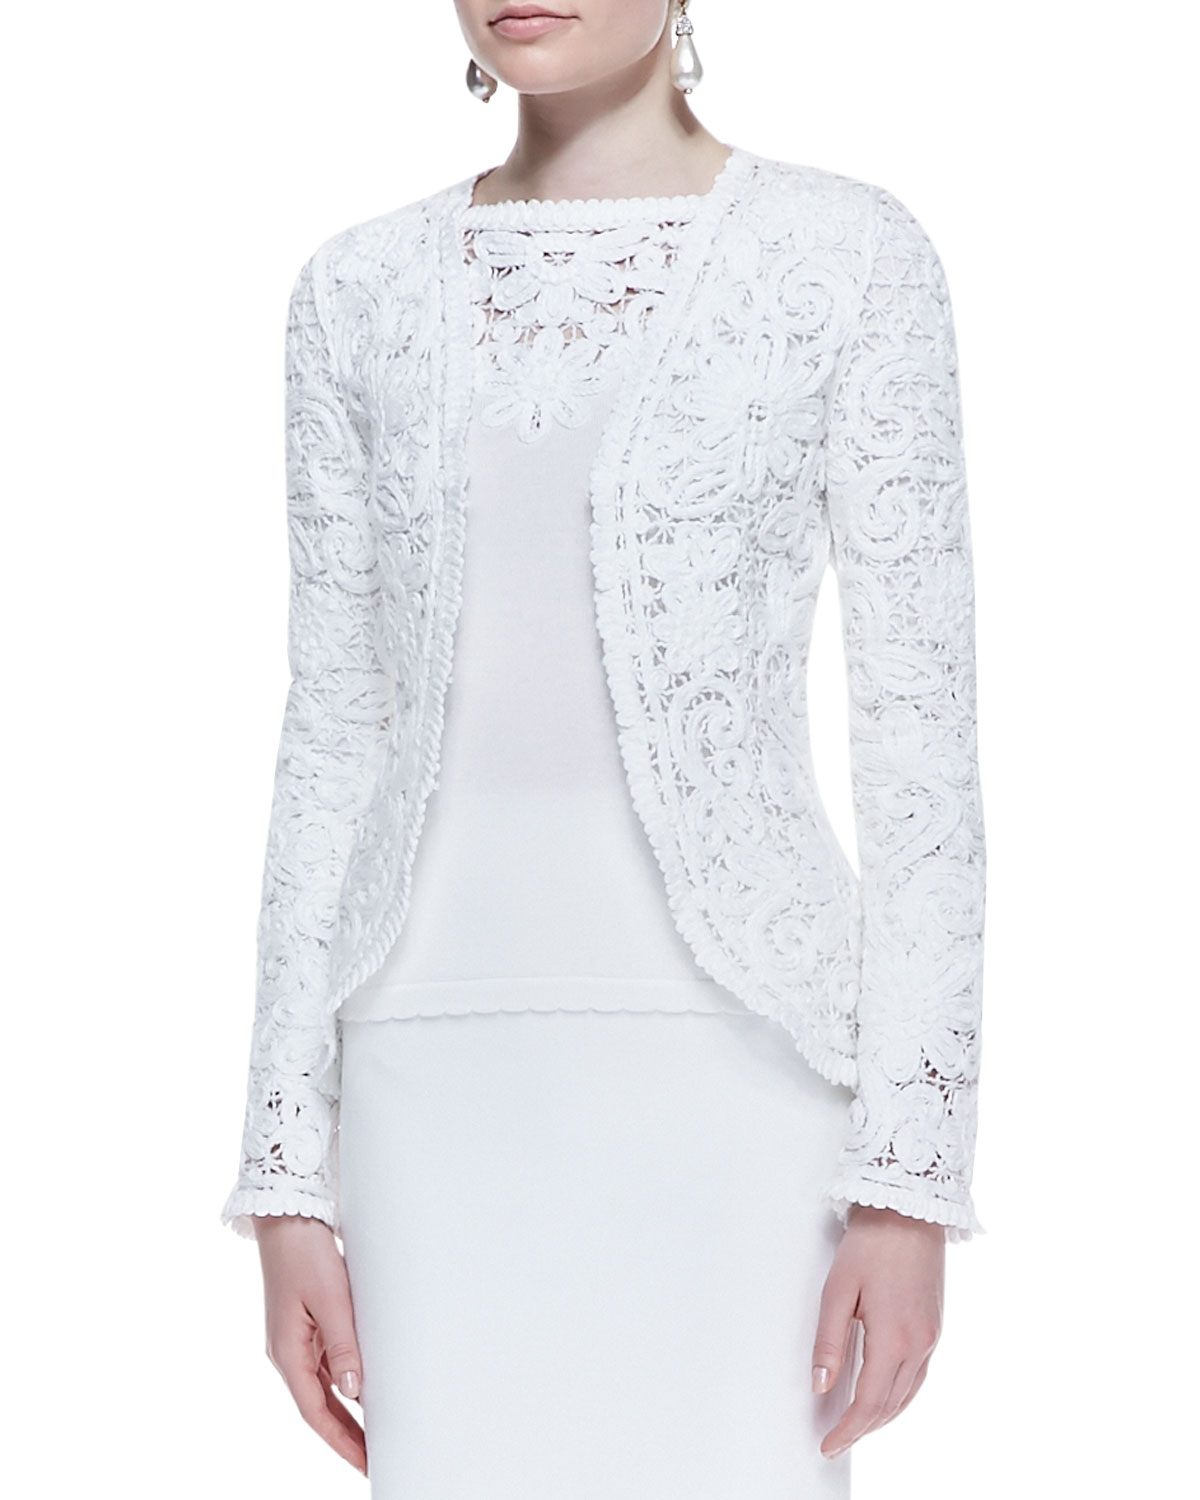 Oscar de la renta Embroidered Cotton Lace Jacket in White | Lyst